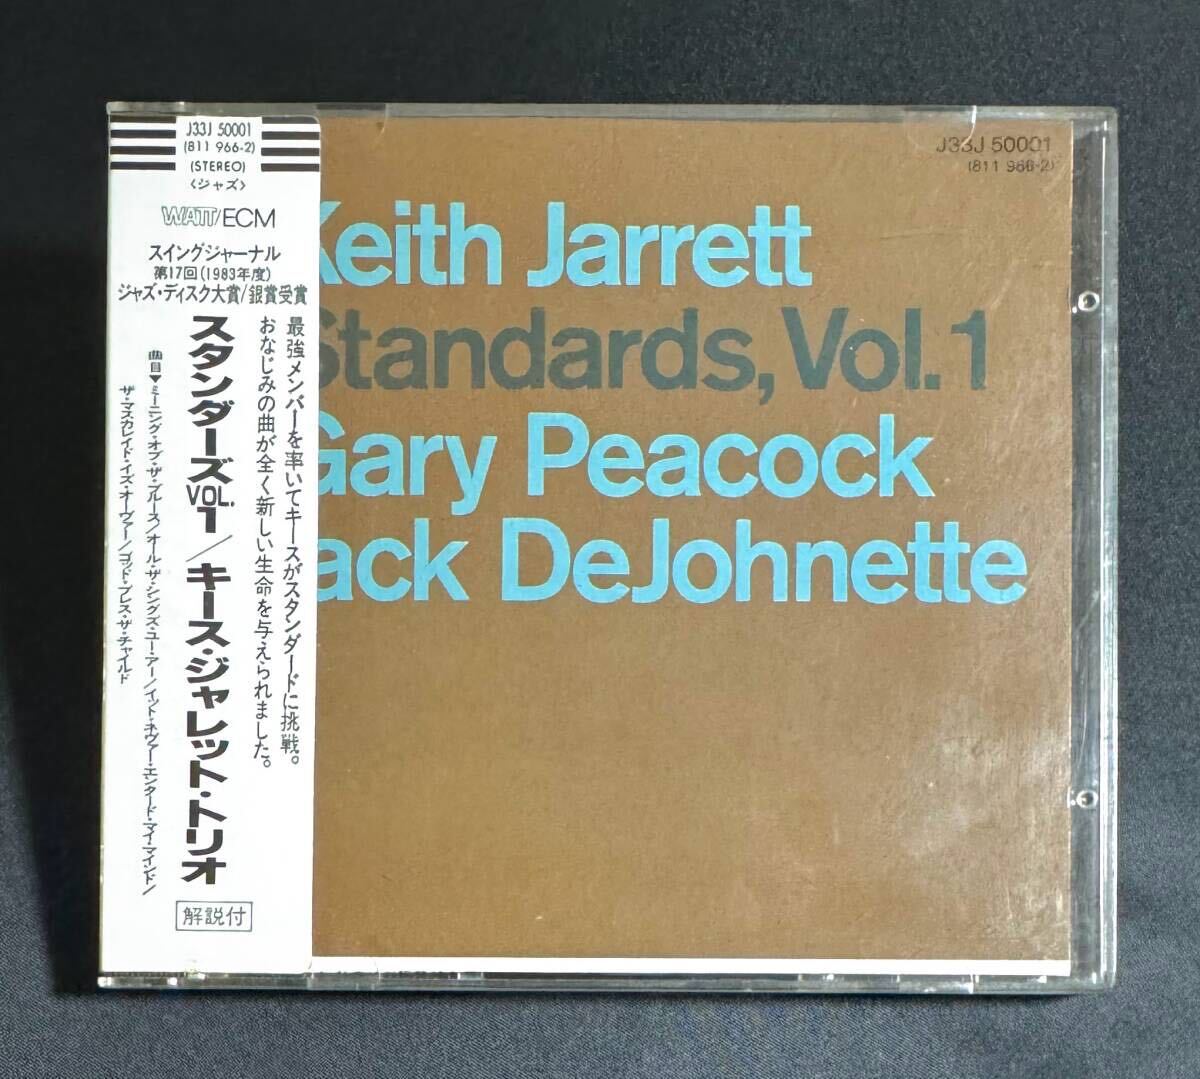 【J33J-50001/西独盤/シール帯】キース・ジャレット/スタンダーズ Vol.1 税表記なし 3300円 Keith Jarrett/Standards, Vol.1 West Germanyの画像1